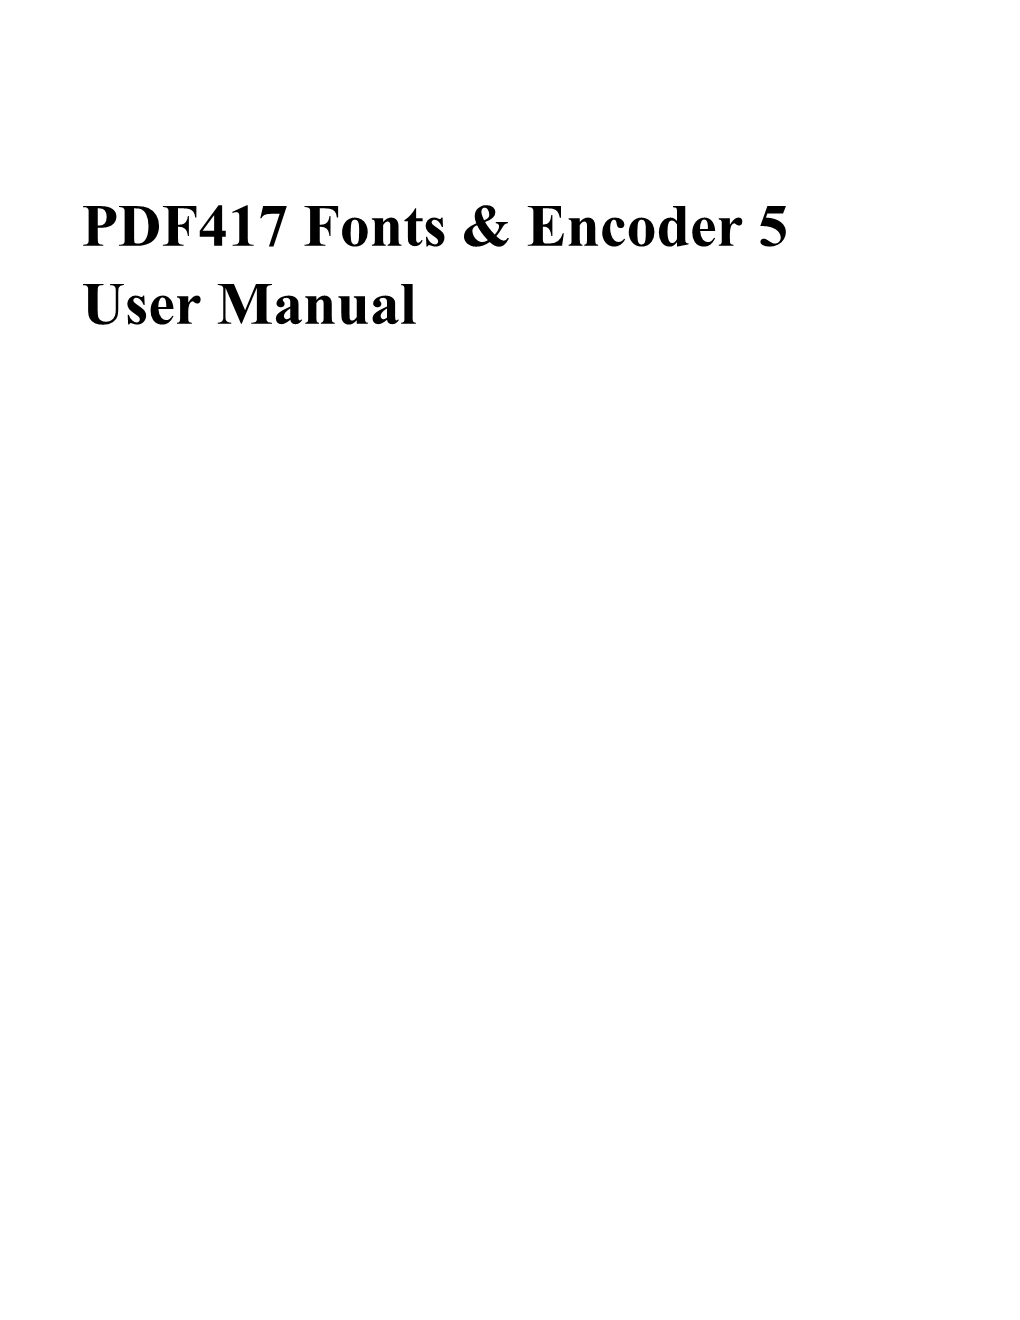 PDF417 Fonts & Encoder 5 User Manual